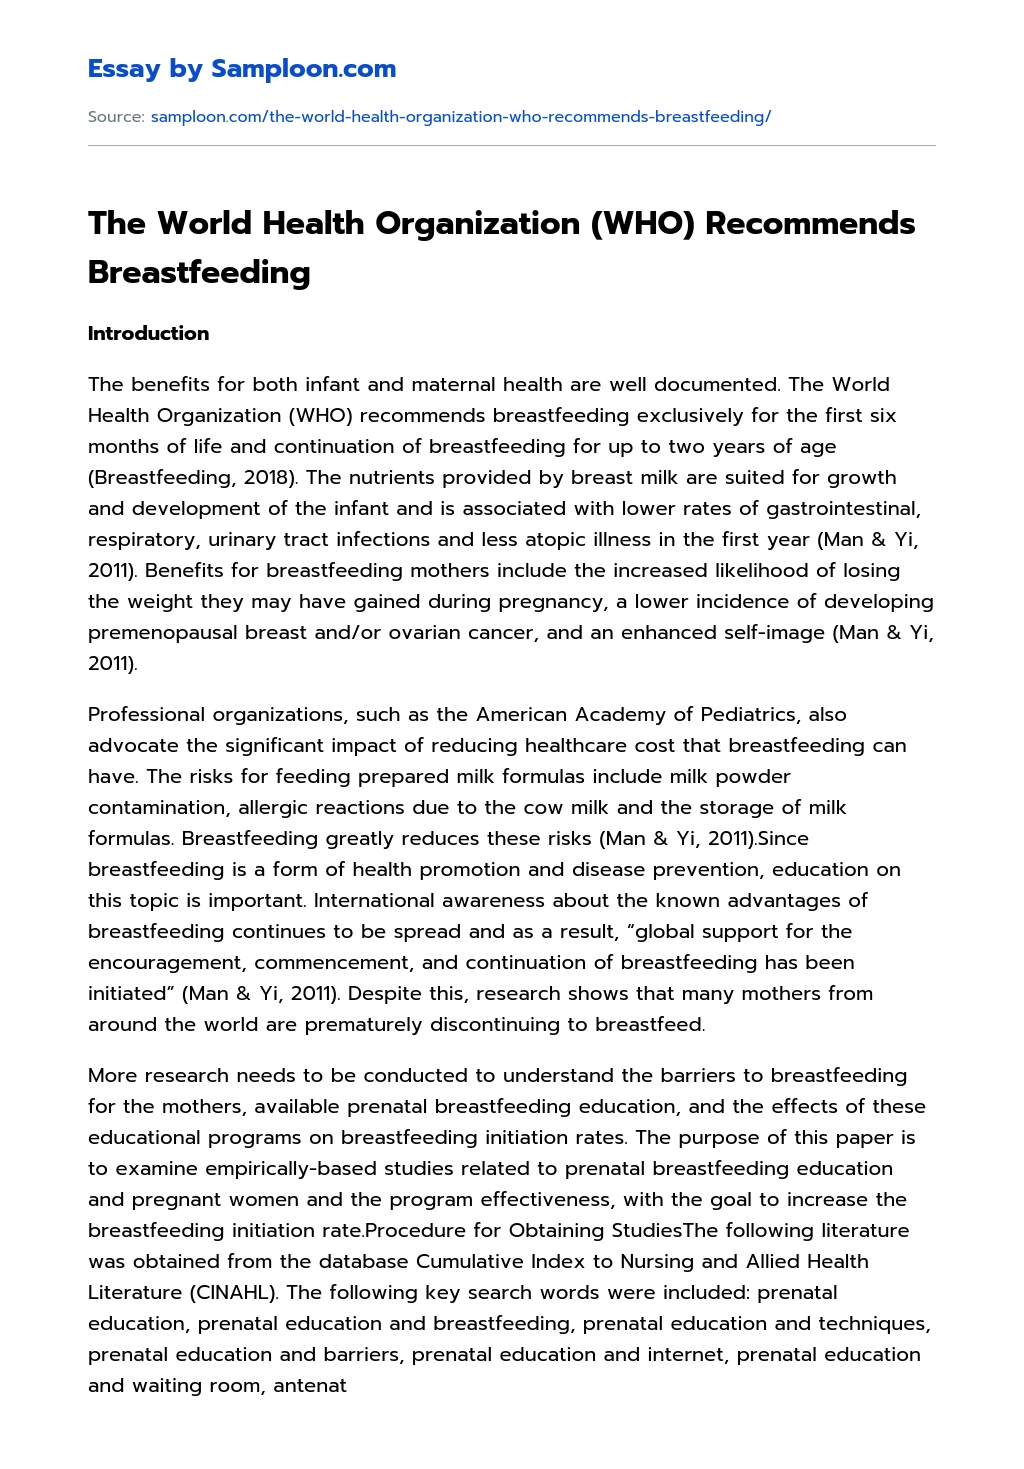 The World Health Organization (WHO) Recommends Breastfeeding essay